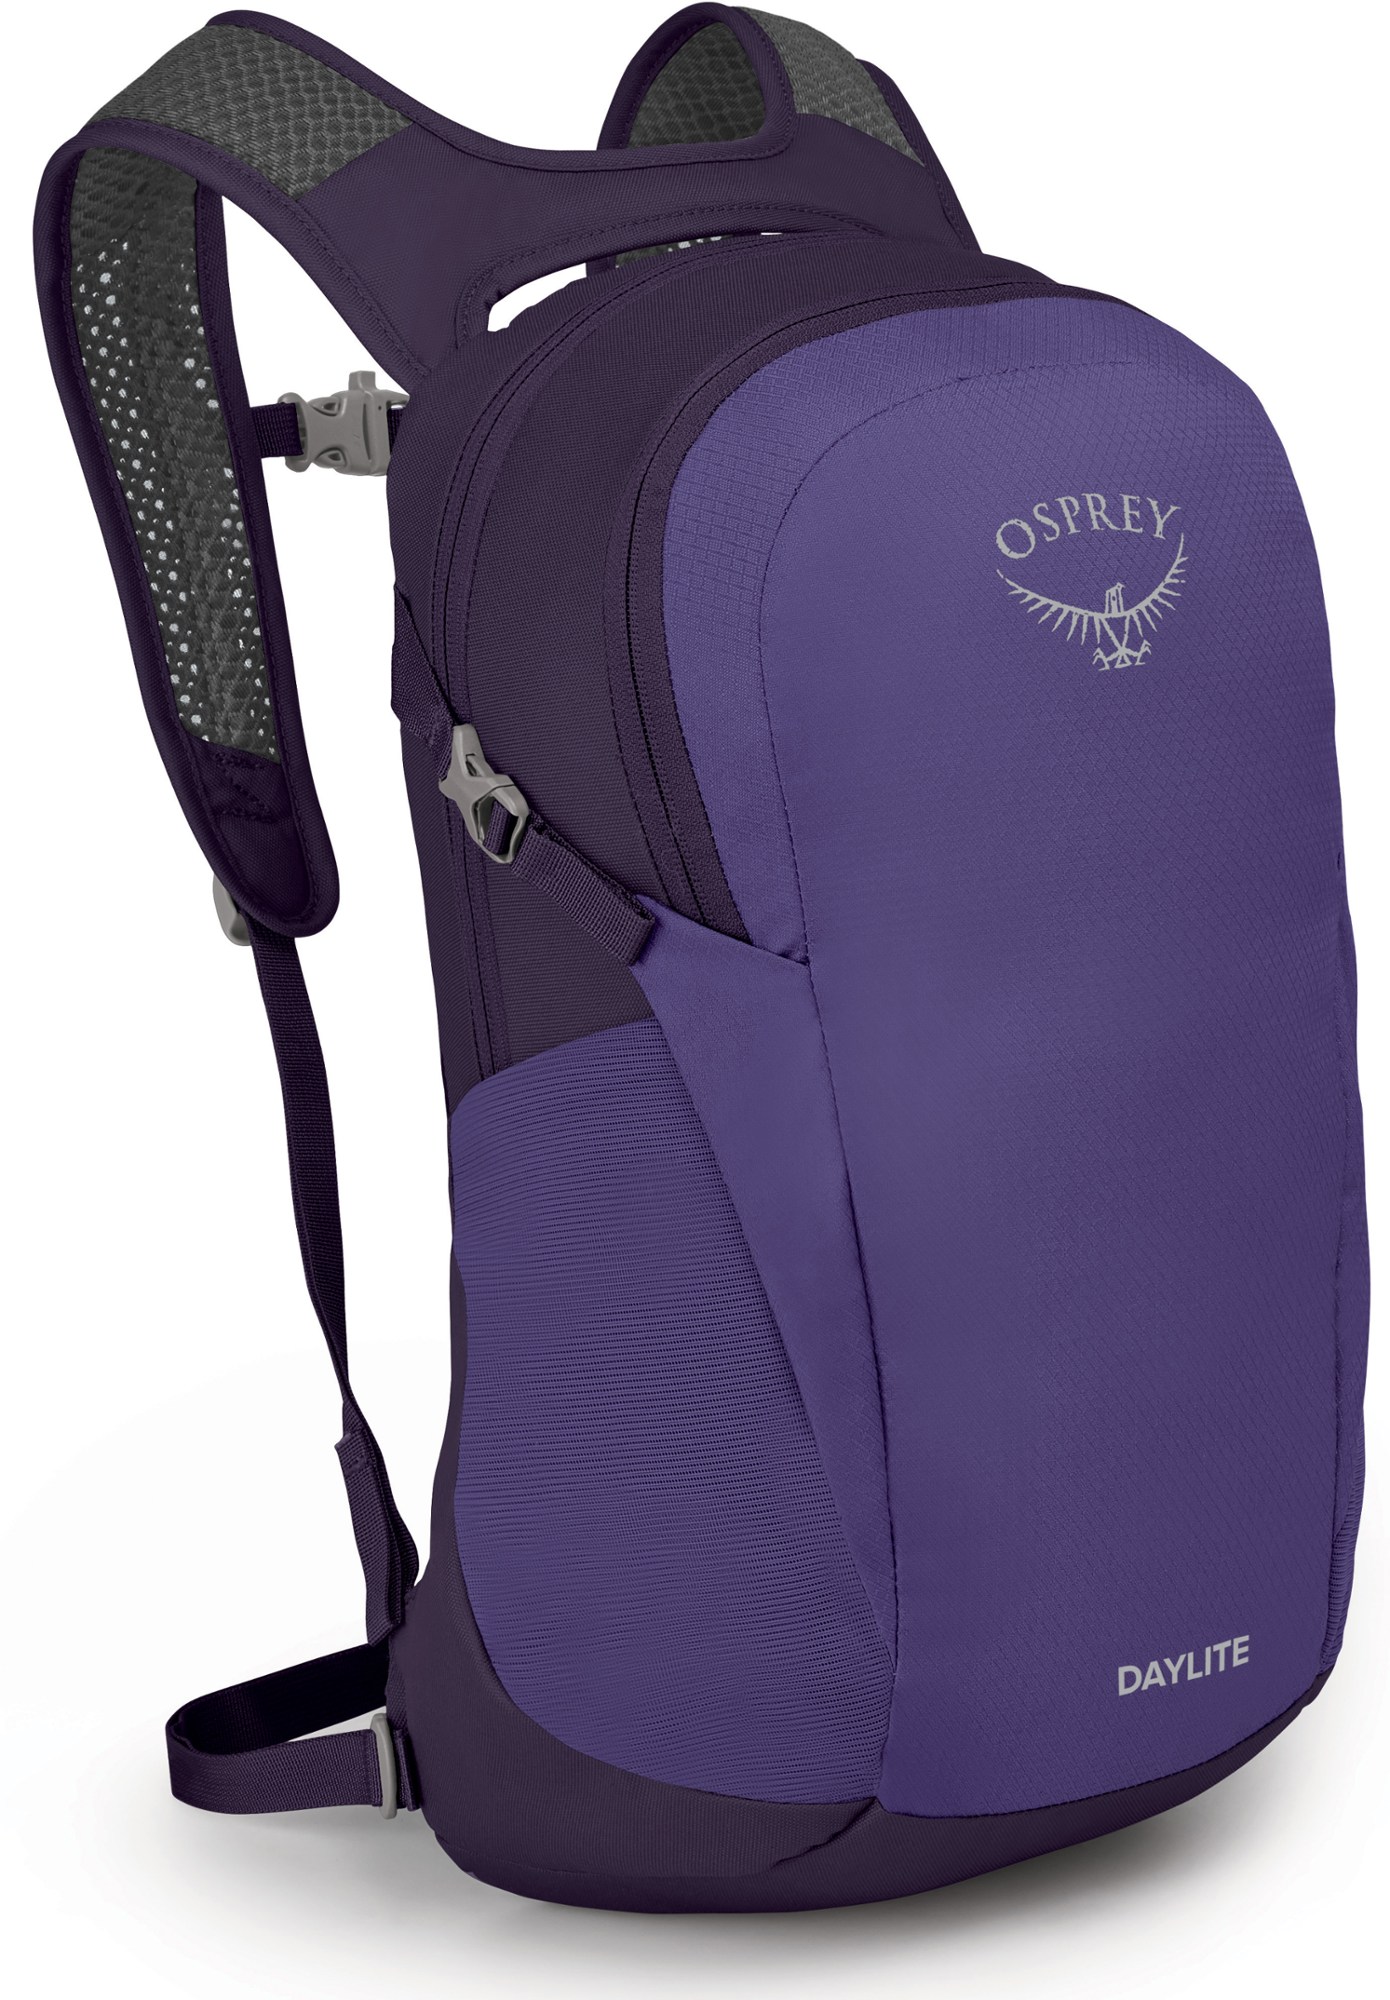 Дэйлайт пакет Osprey, фиолетовый